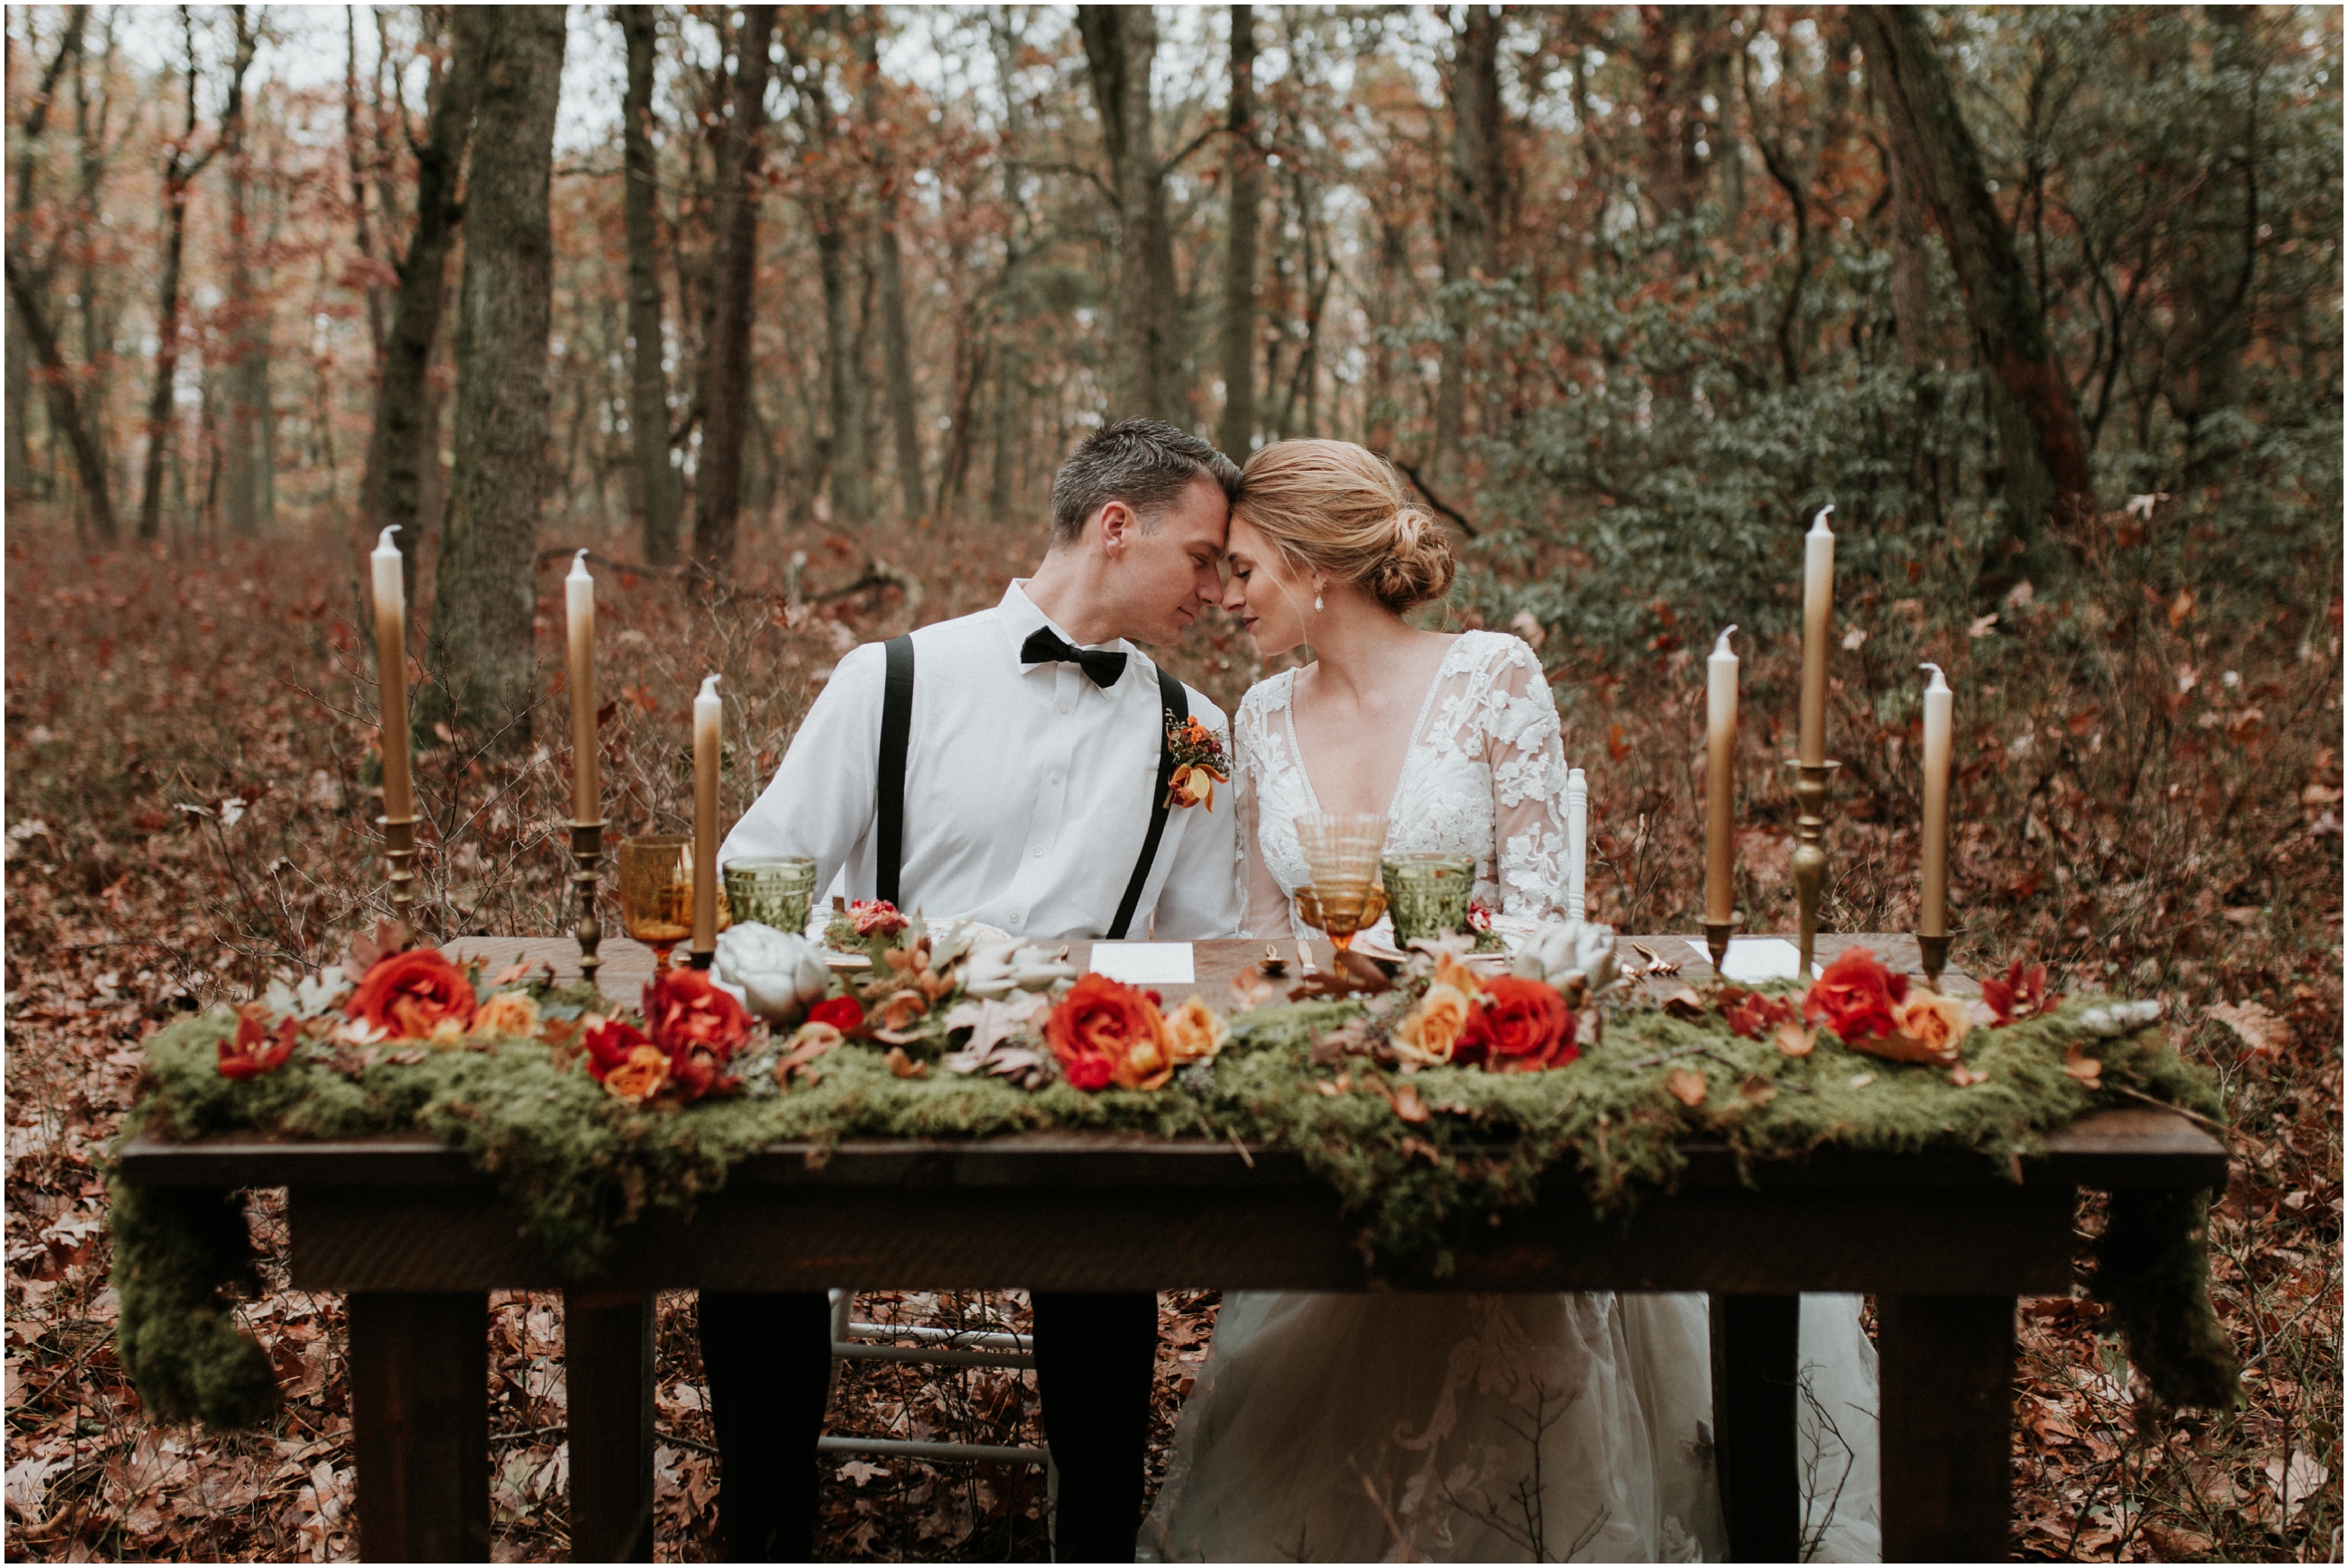 Fall Styled Wedding Inspiration Shoot | Frost Woods Park, New Jersey |  torikelner.com